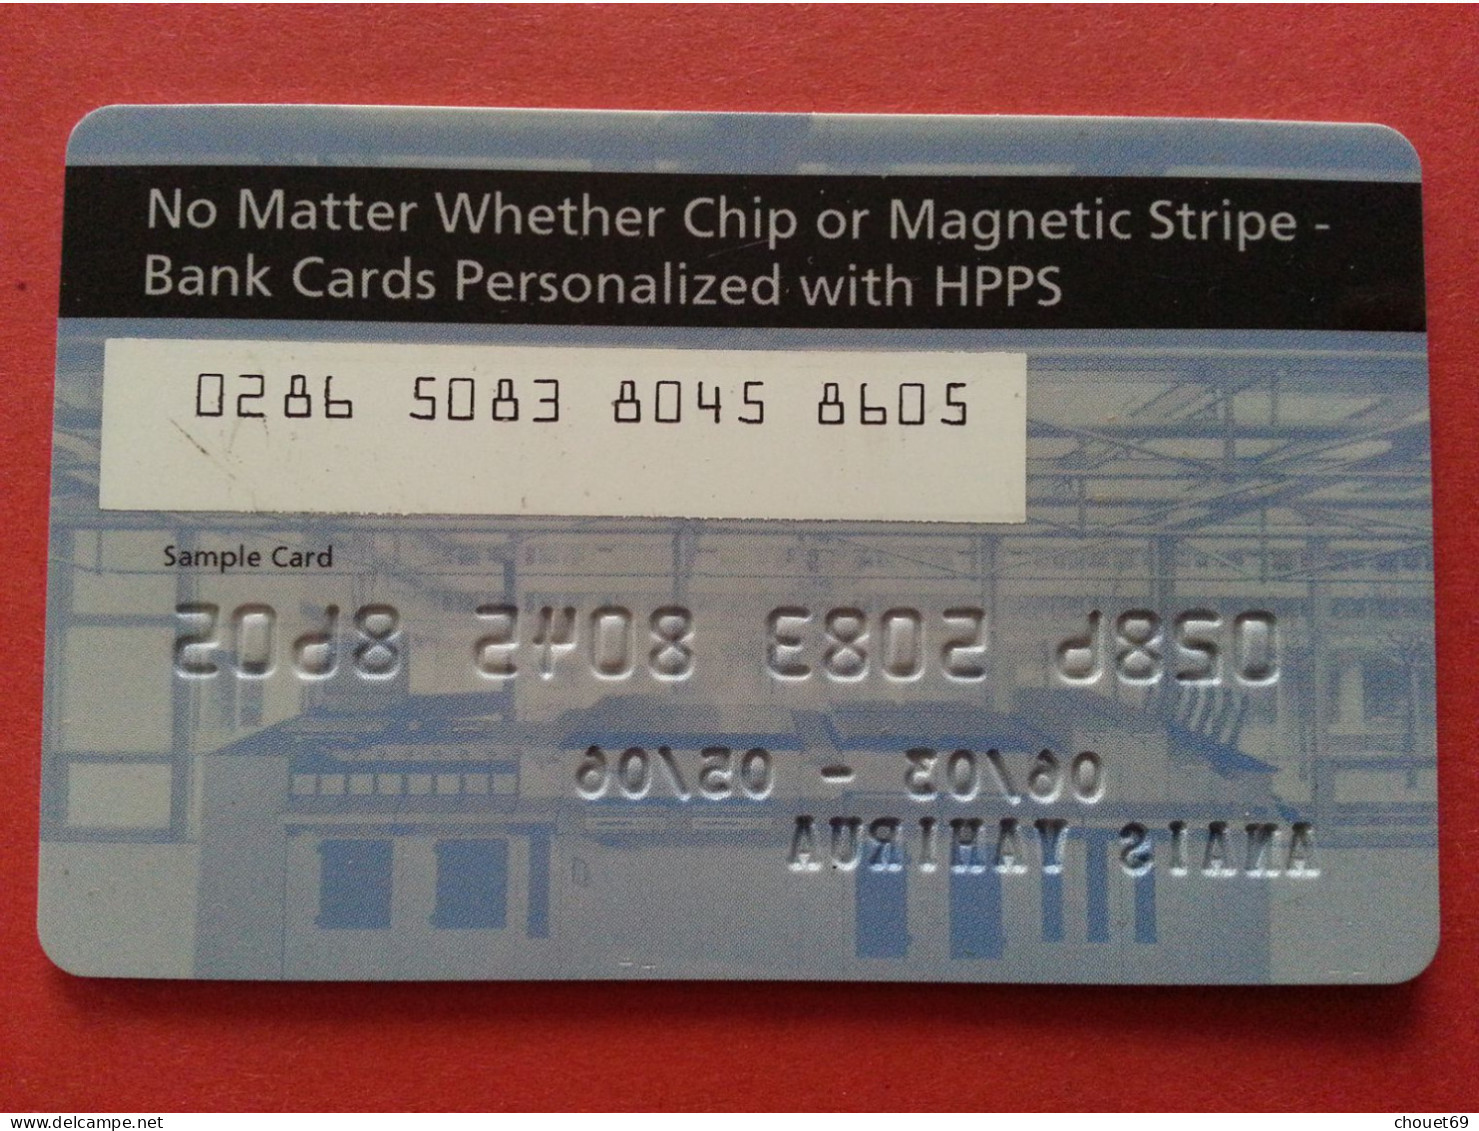 ORGA BANK CARD TEST CARD N° Behind Smart Demo (BA0415 - Credit Cards (Exp. Date Min. 10 Years)